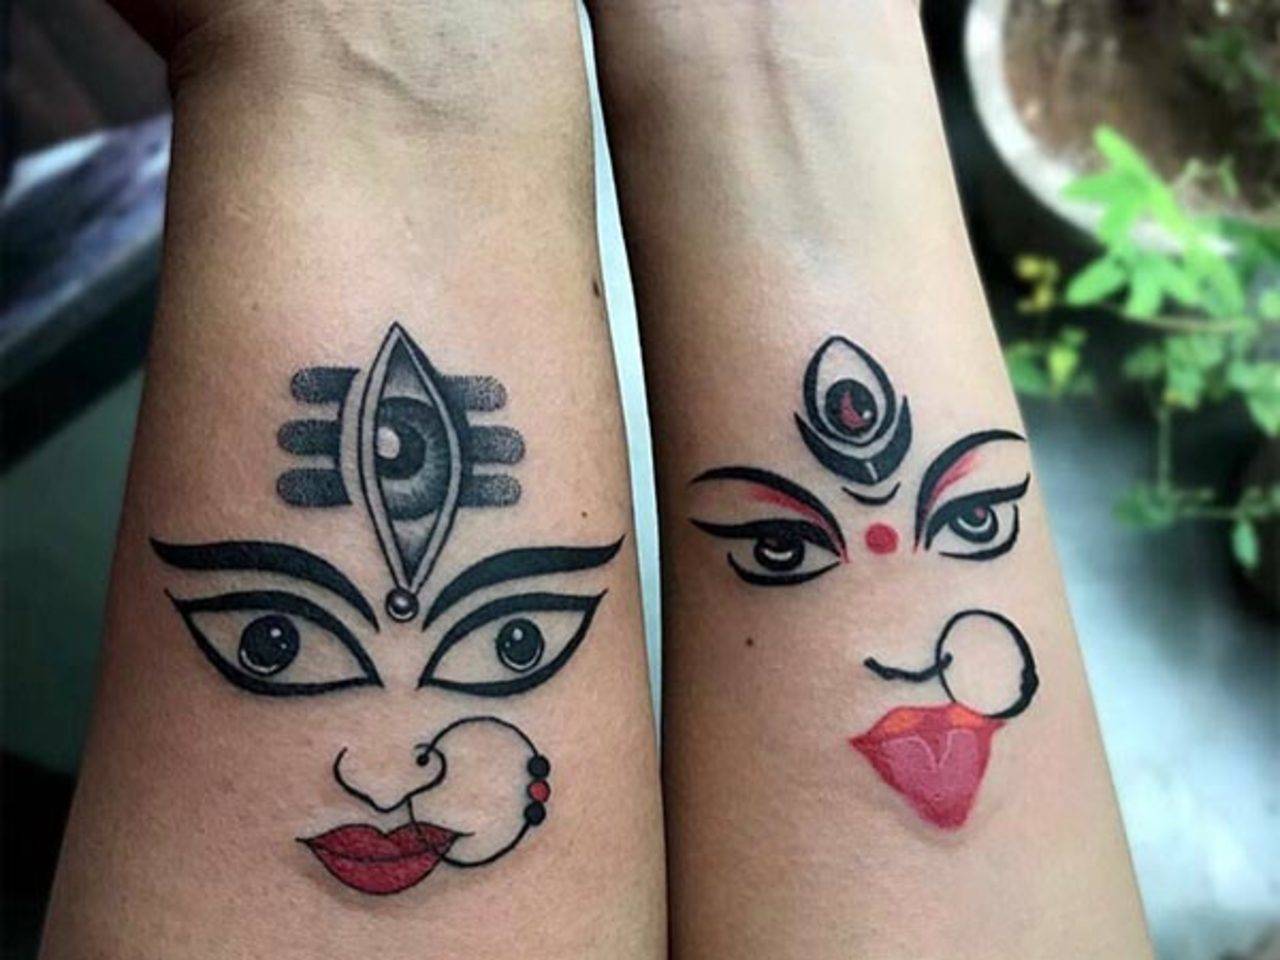 Admin Permanent Tattoos  Stylish Star Allu Arjun Fans  Facebook